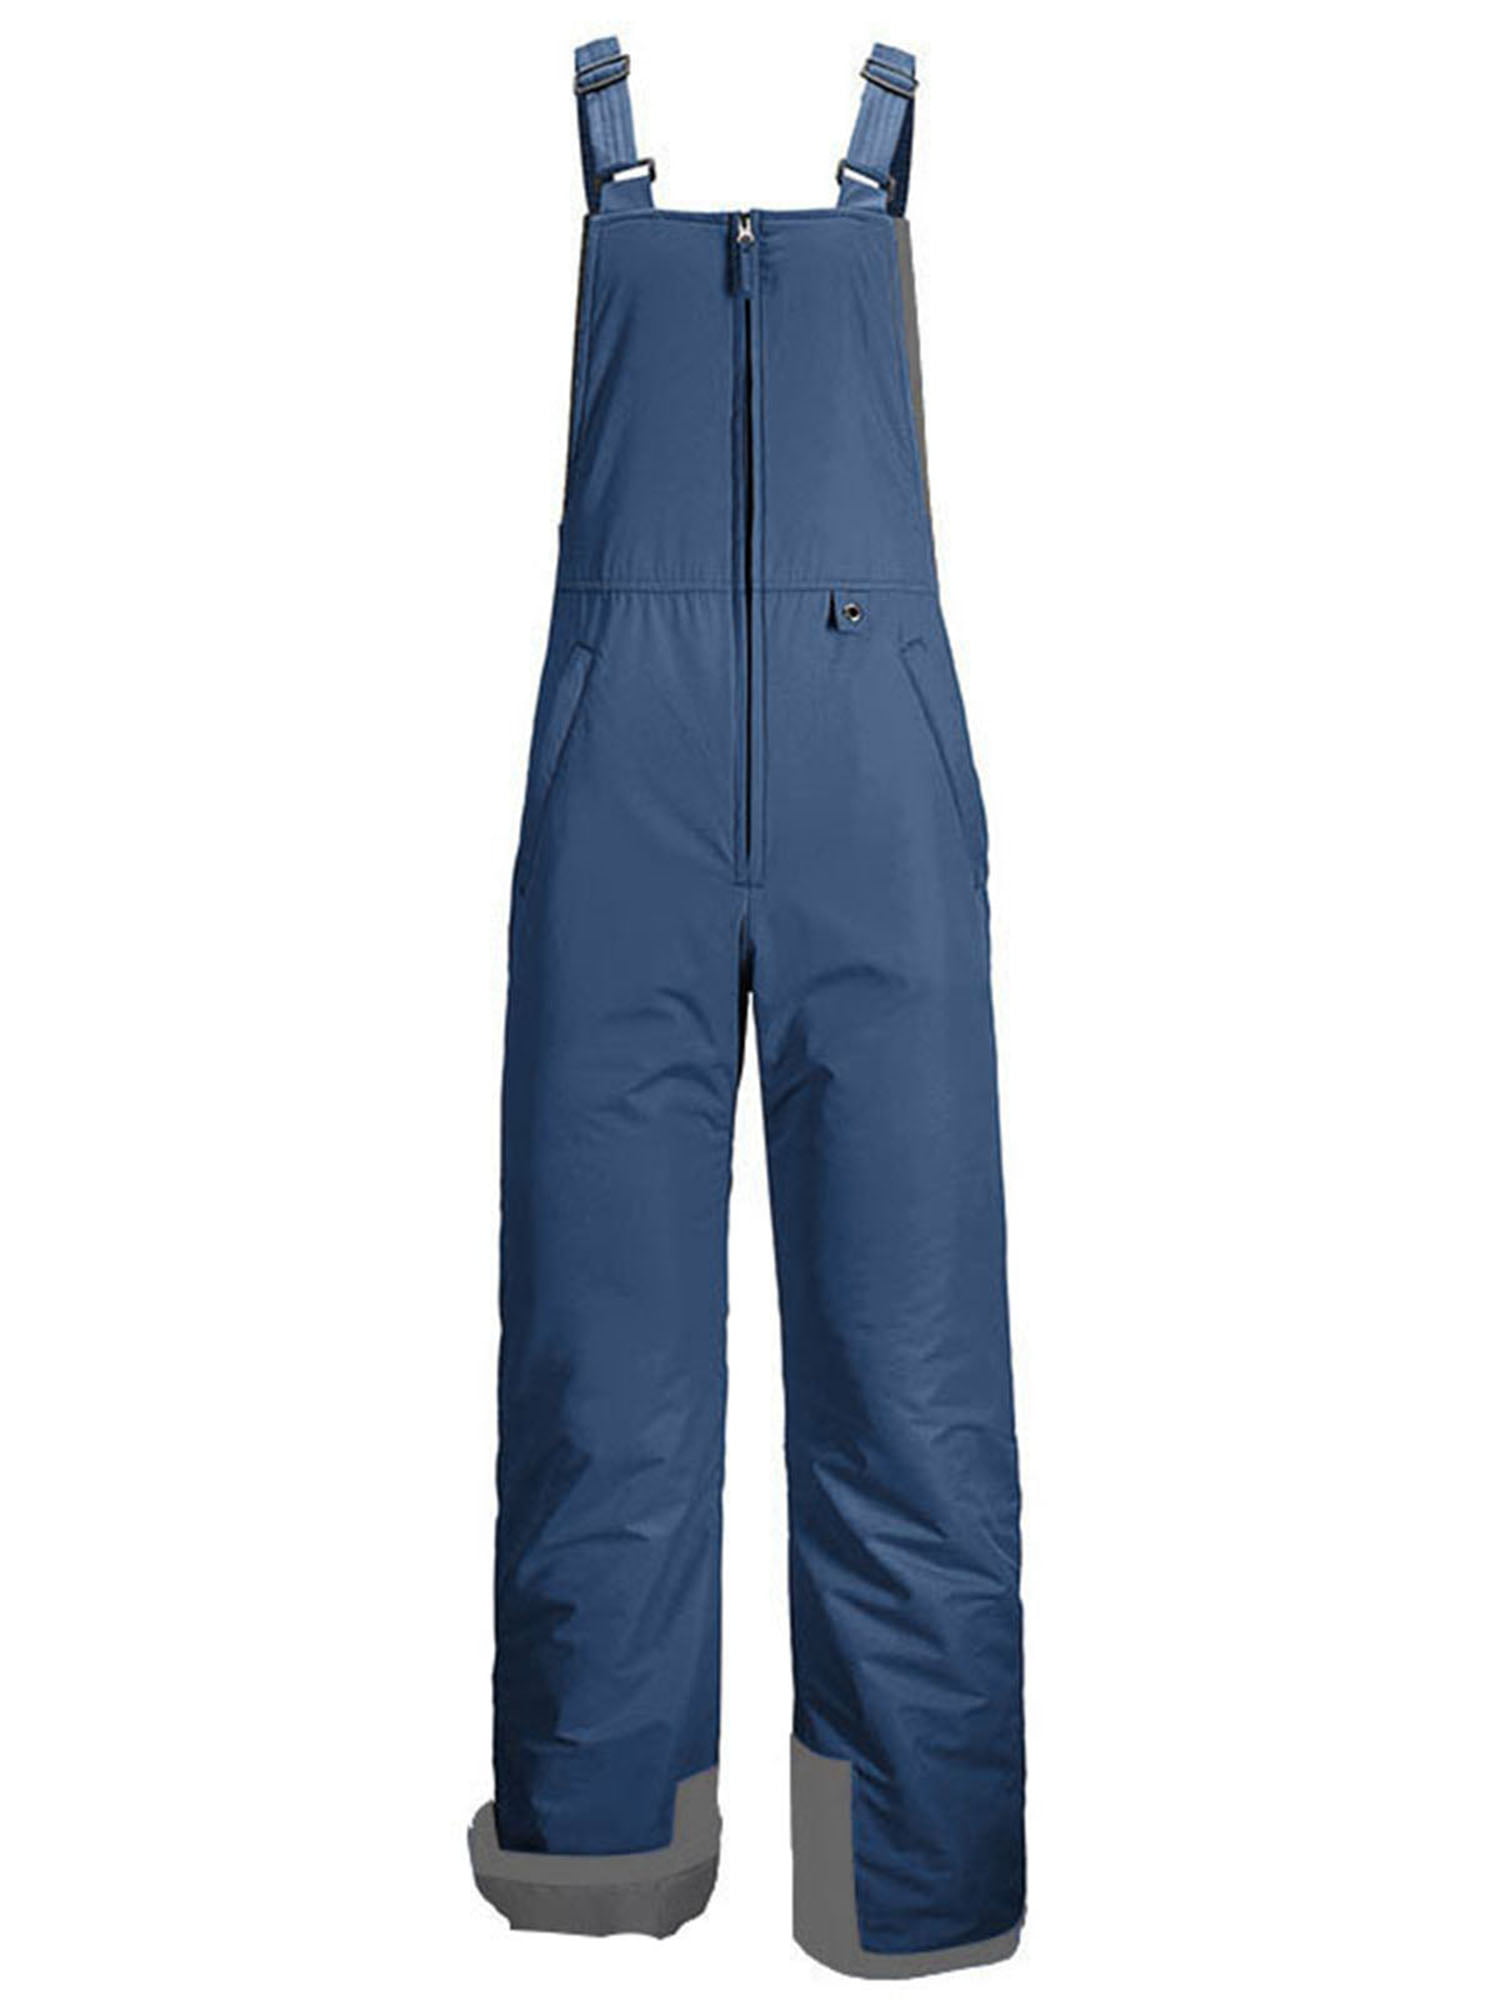 Biekopu Men's Essential Insulated Bib Overalls Snow Bibs Ski Pants ...